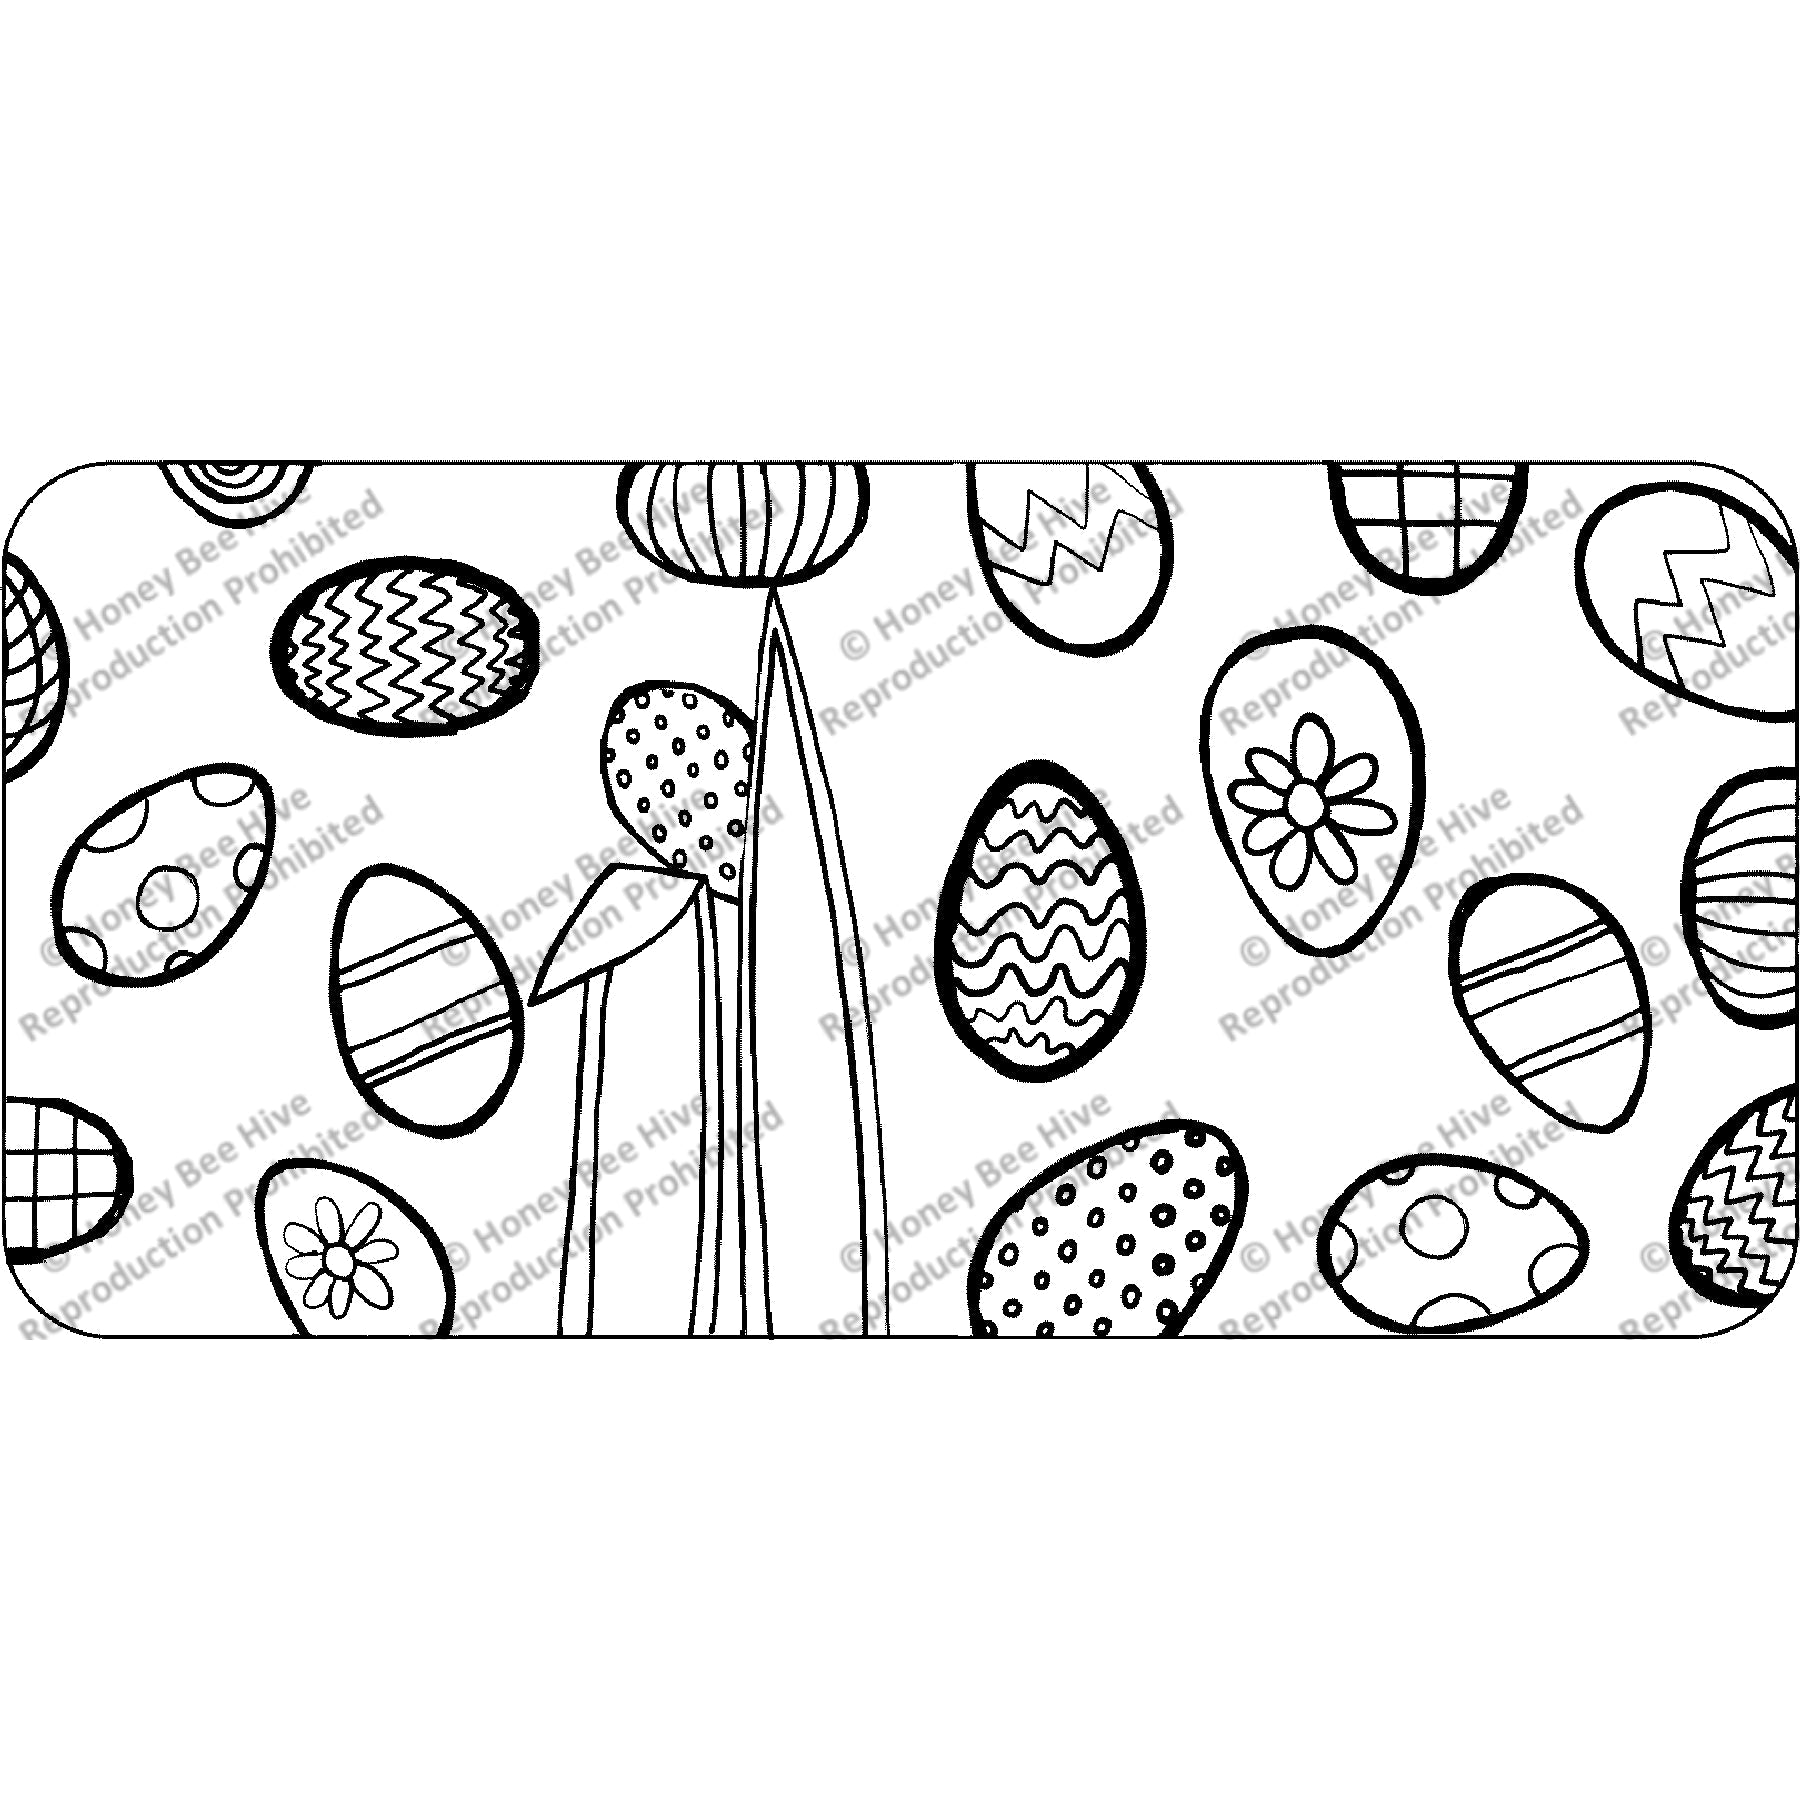 Easter Eggs for Spring, rug hooking pattern